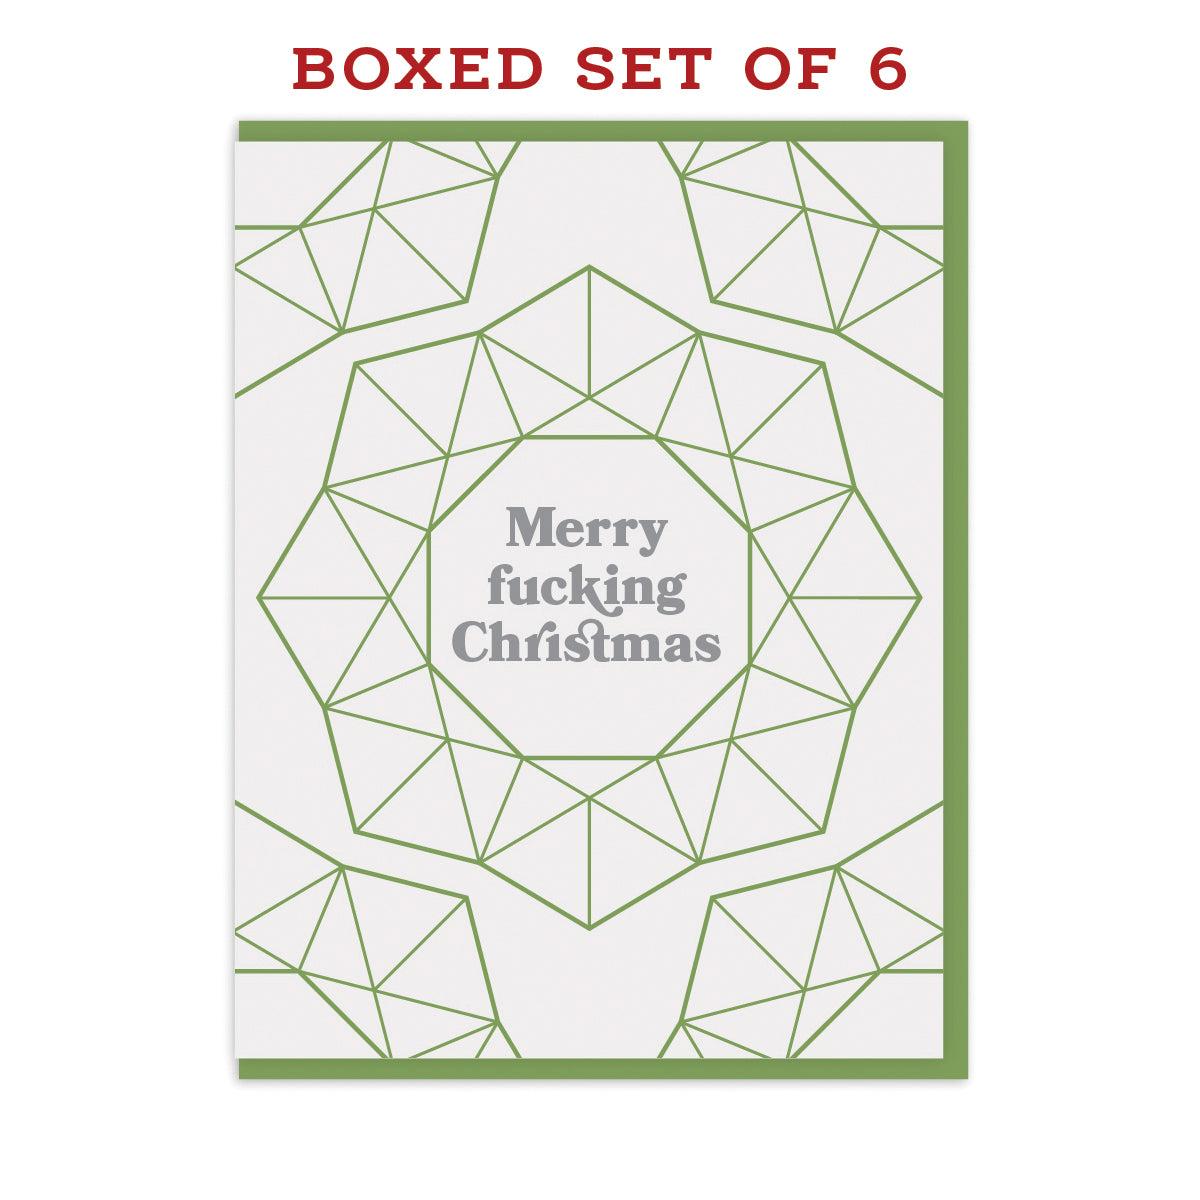 Merry Fucking Christmas - Boxed Set of 6